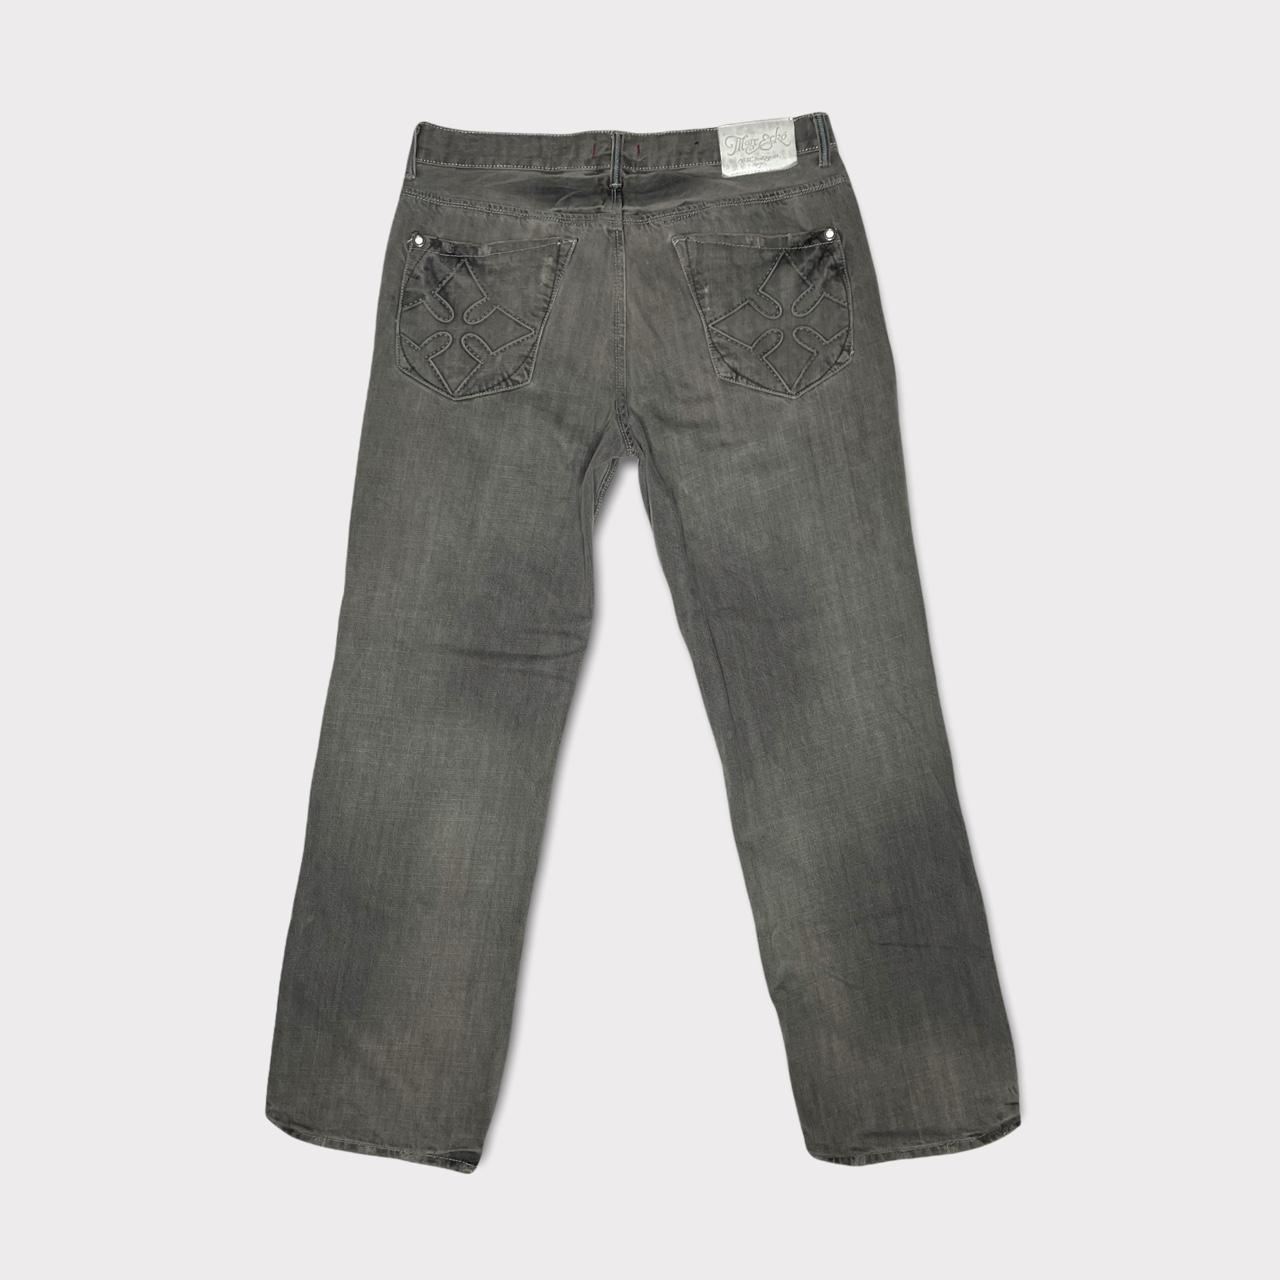 Ecko Unltd. Men's Grey Jeans (2)